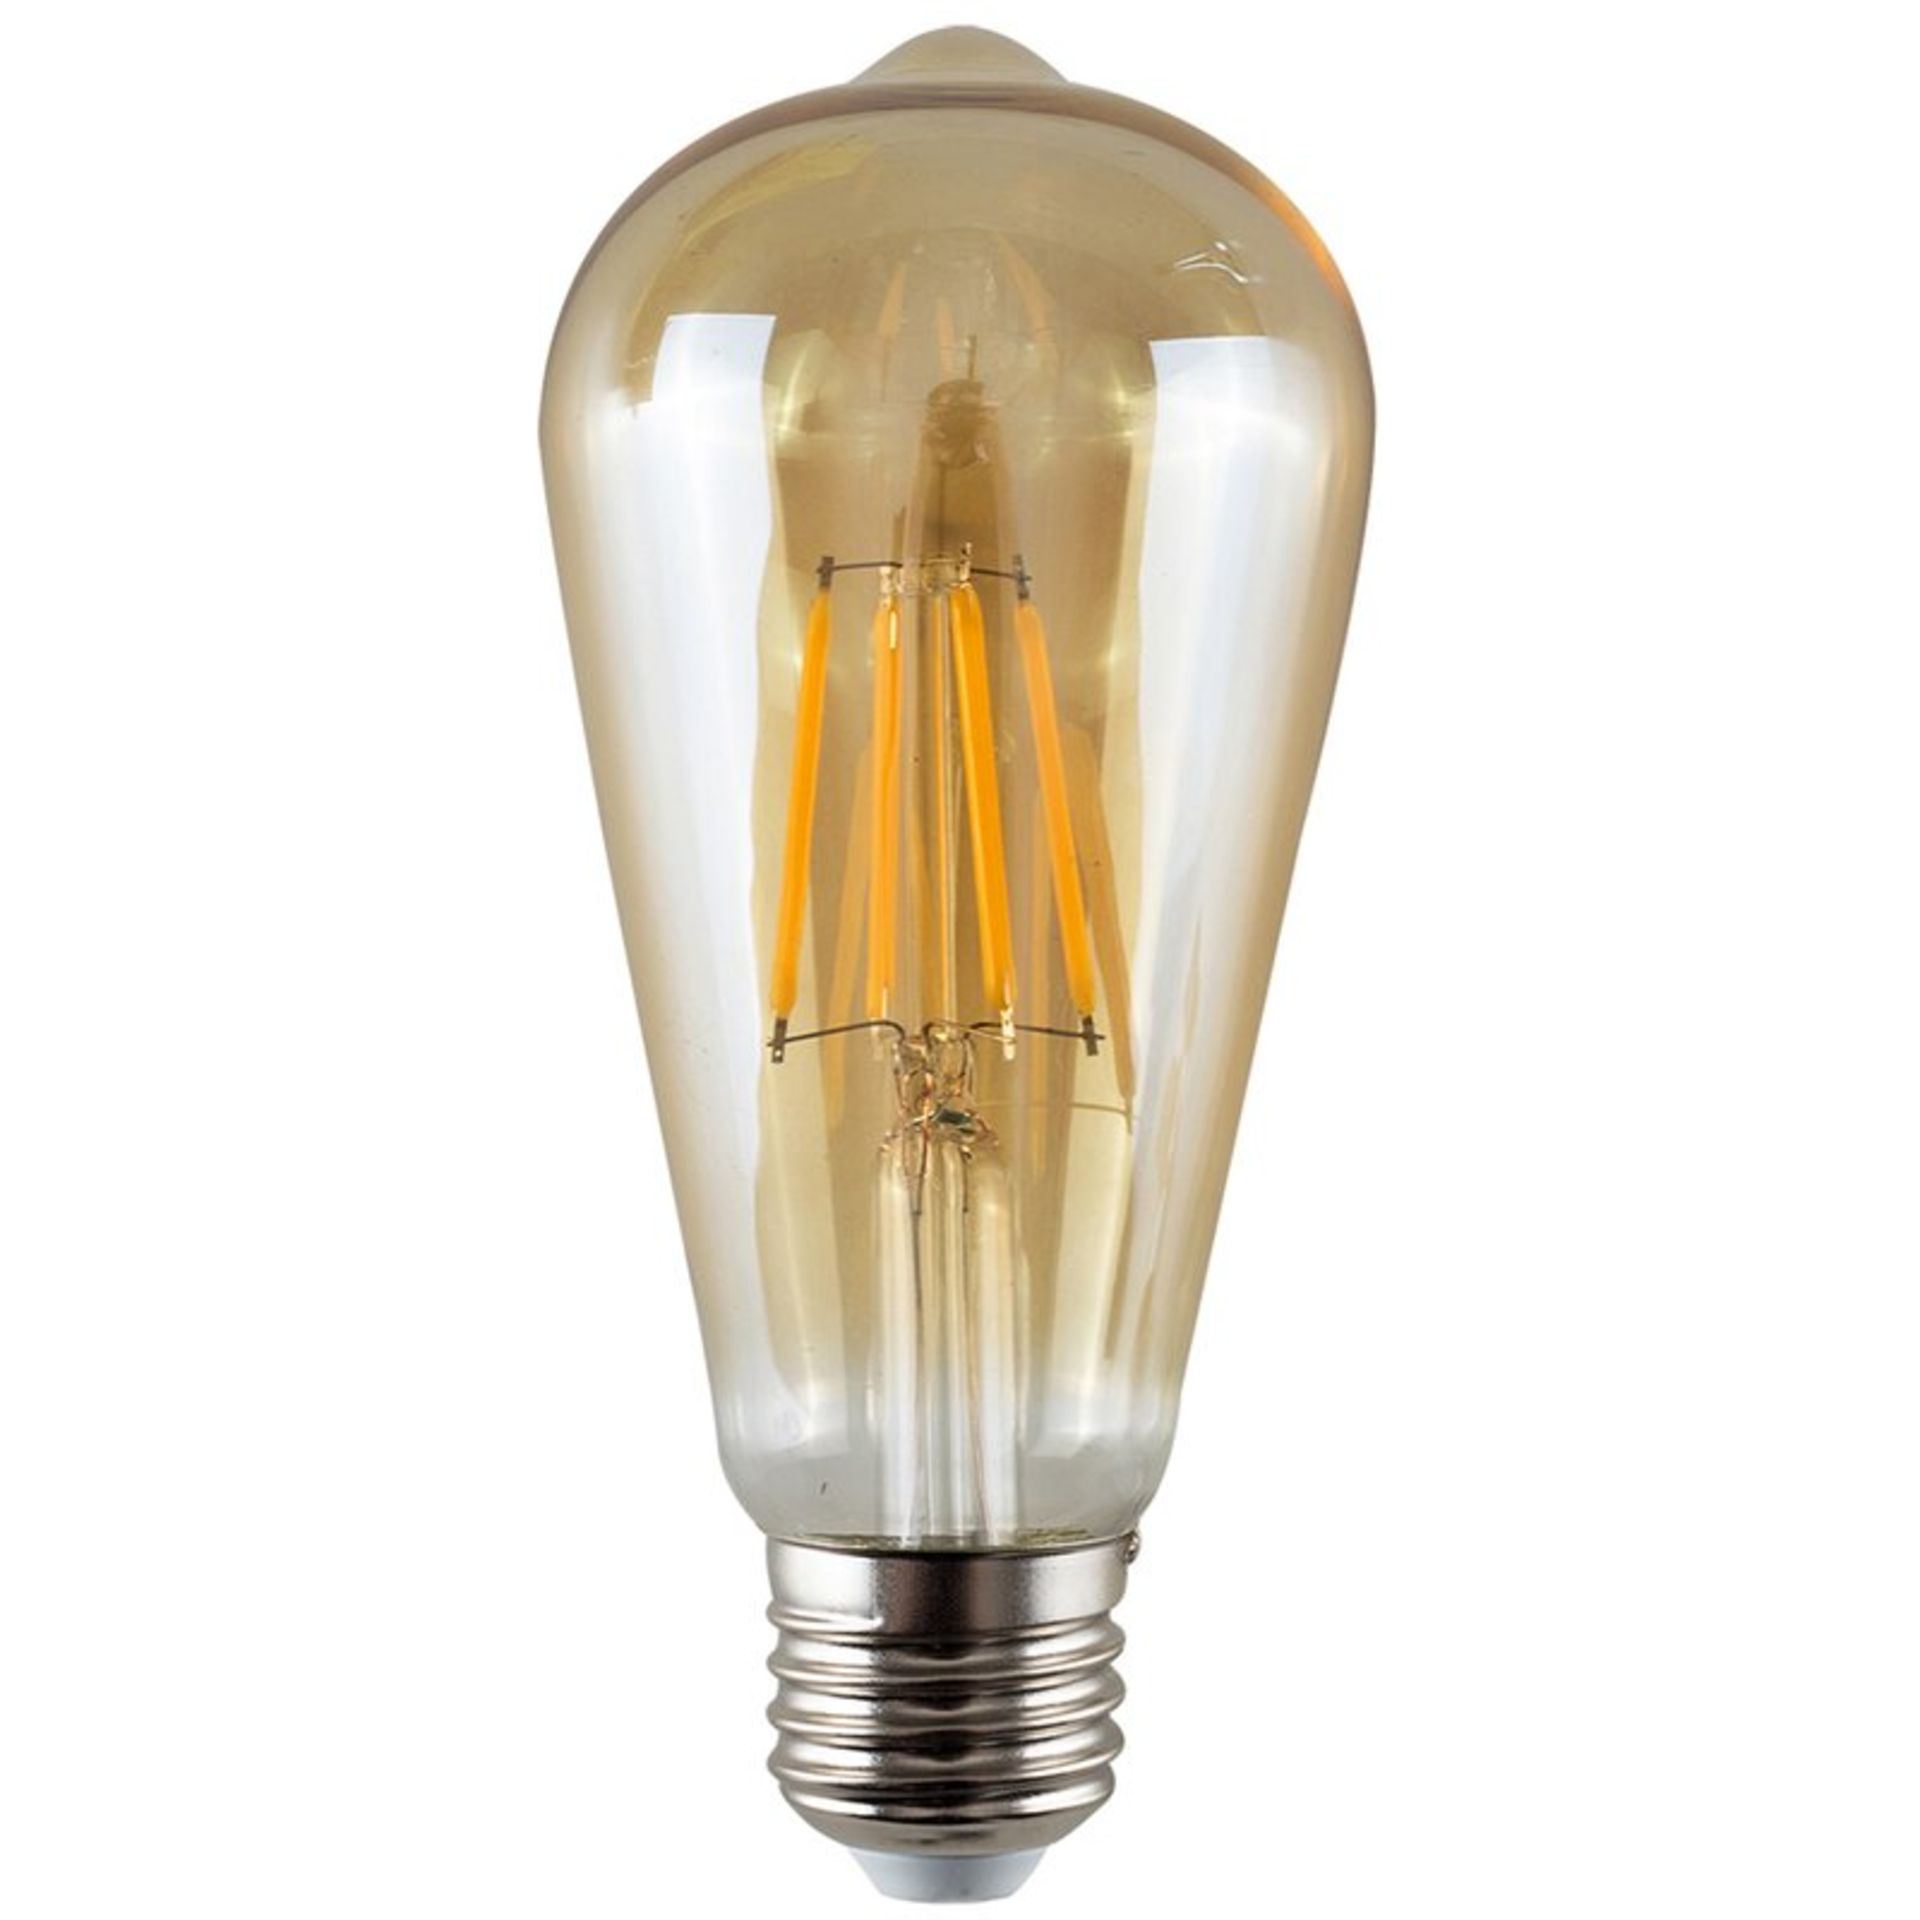 4W Amber LED Vintage Filament Light Bulb by Symple Stuff